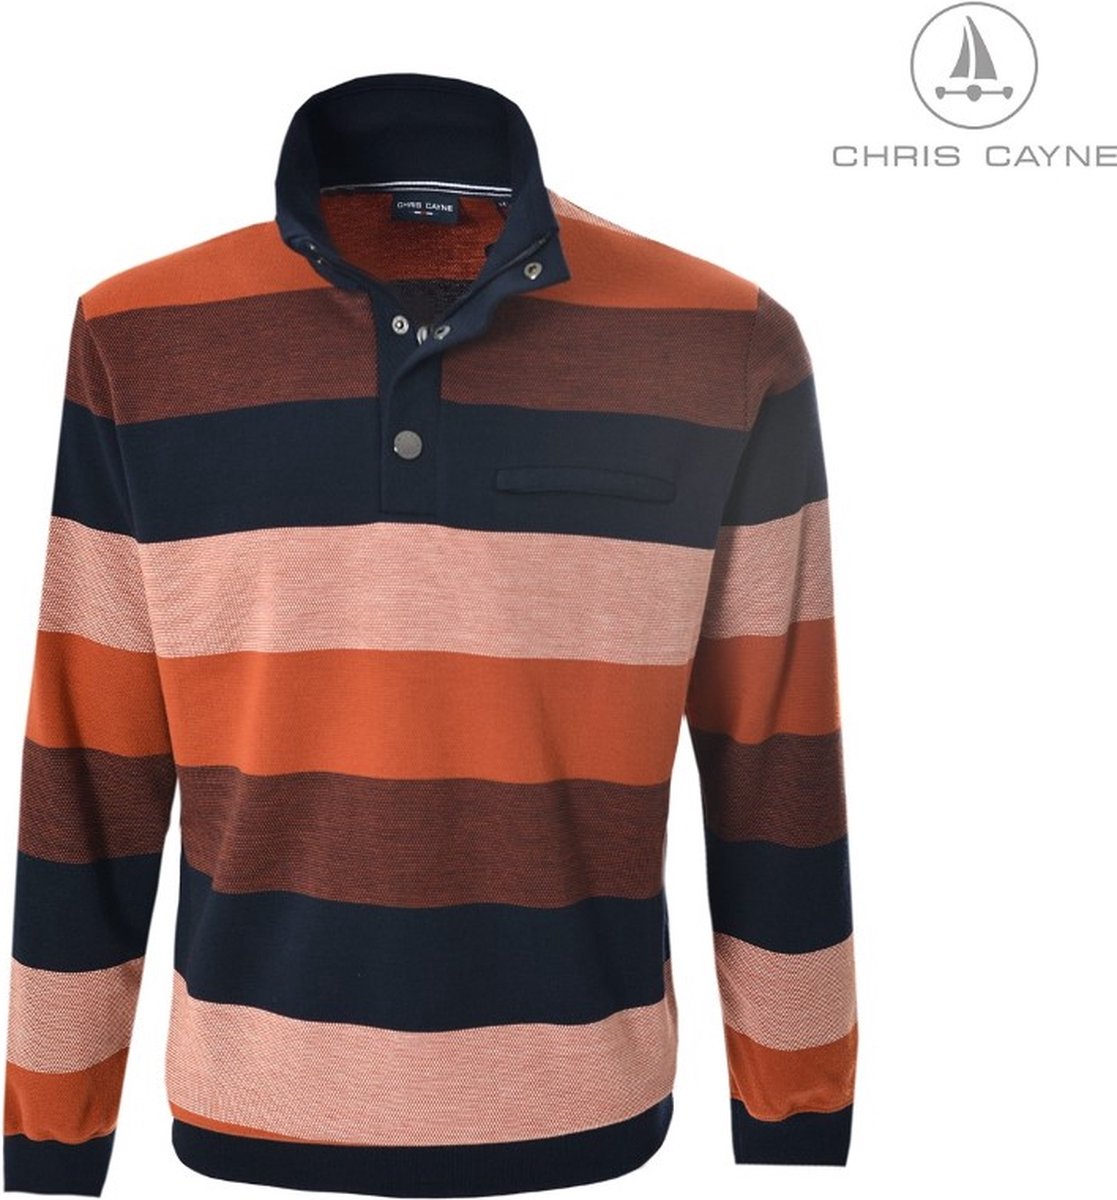 Chris Cayne heren trui - heren sweater met polokraag - borstzak - oranje/blauw streep - maat 3XL